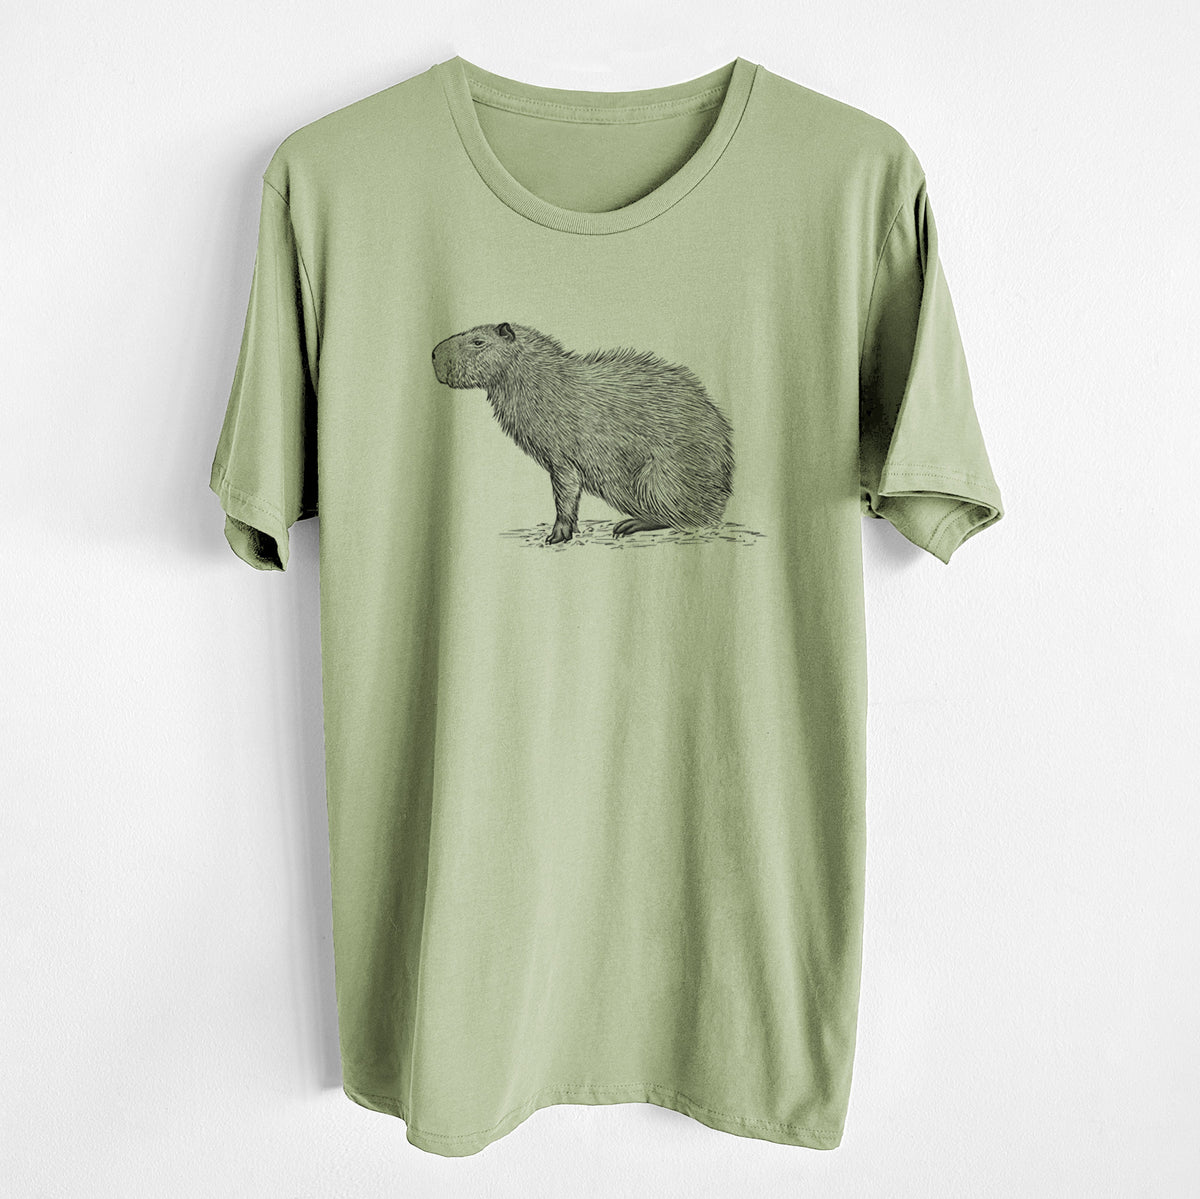 Capybara Profile - Hydrochoerus hydrochaeris - Unisex Crewneck - Made in USA - 100% Organic Cotton